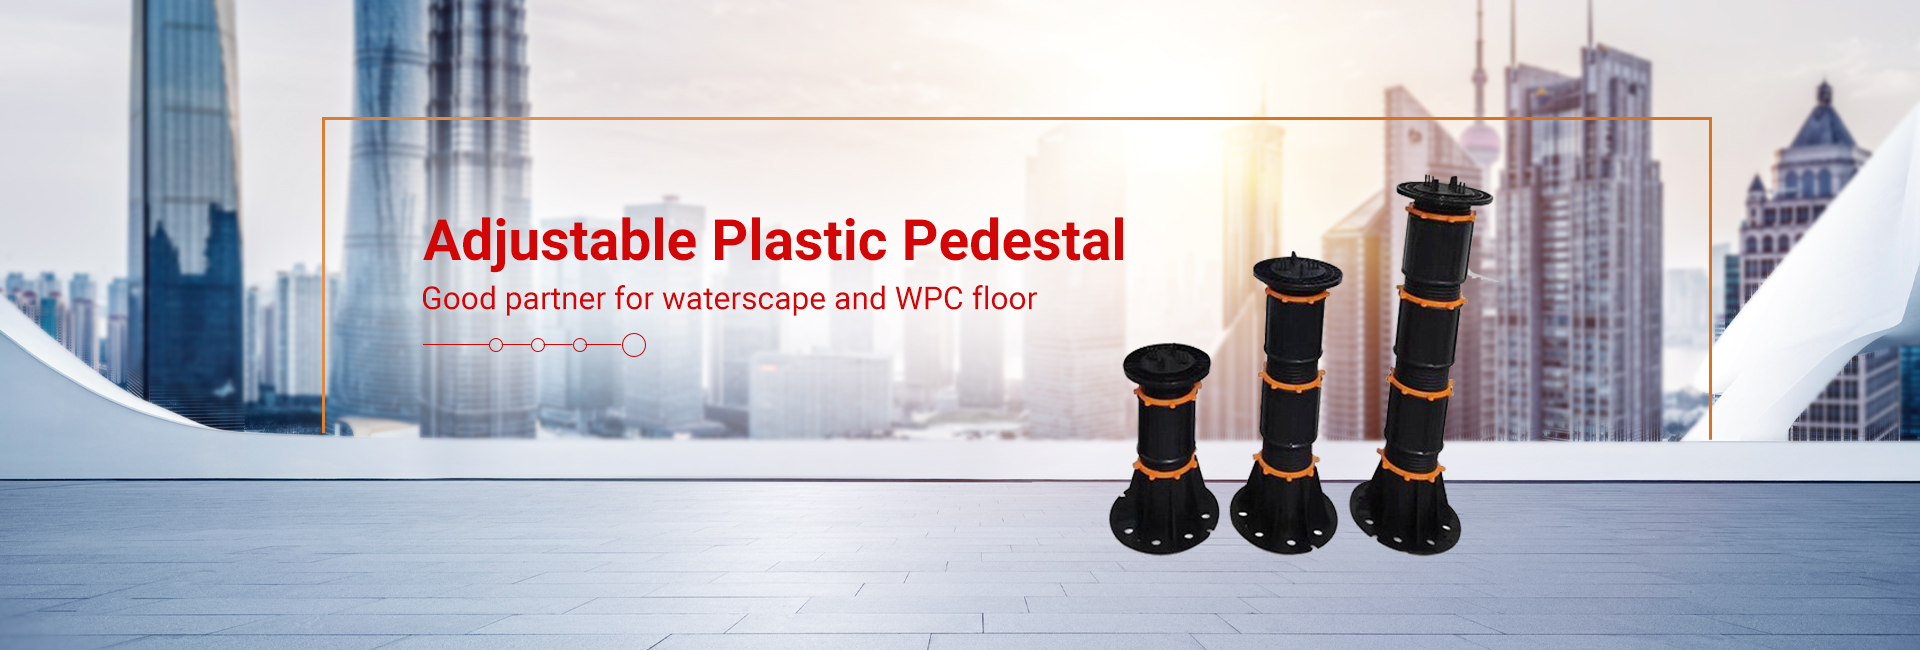 i-adjustable-plastic-pedestal